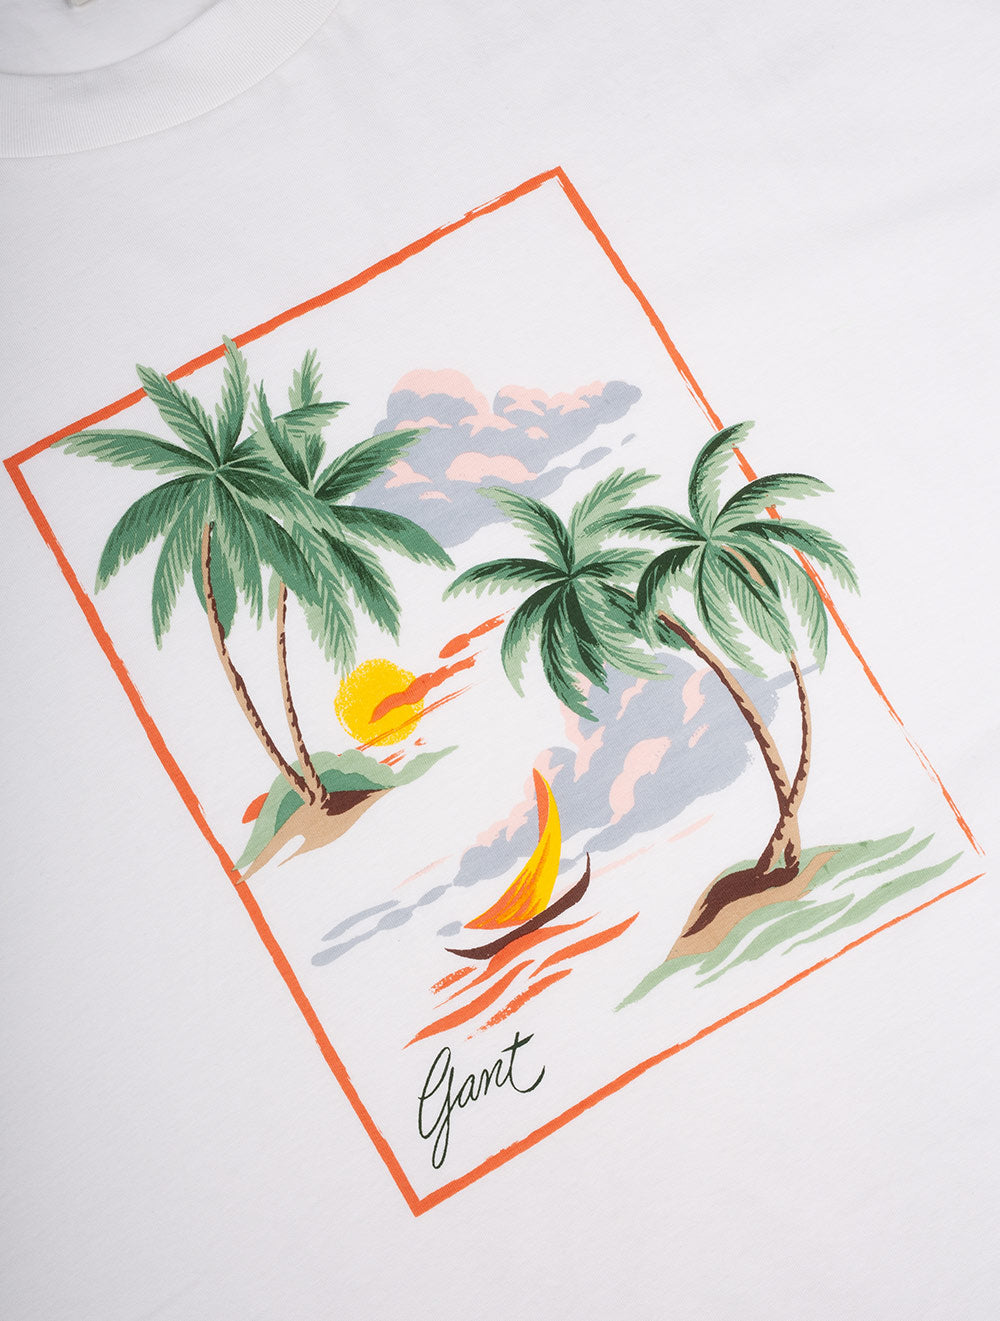 Hawaii Printed Graphic Short Sleeve Shirt Eggshell